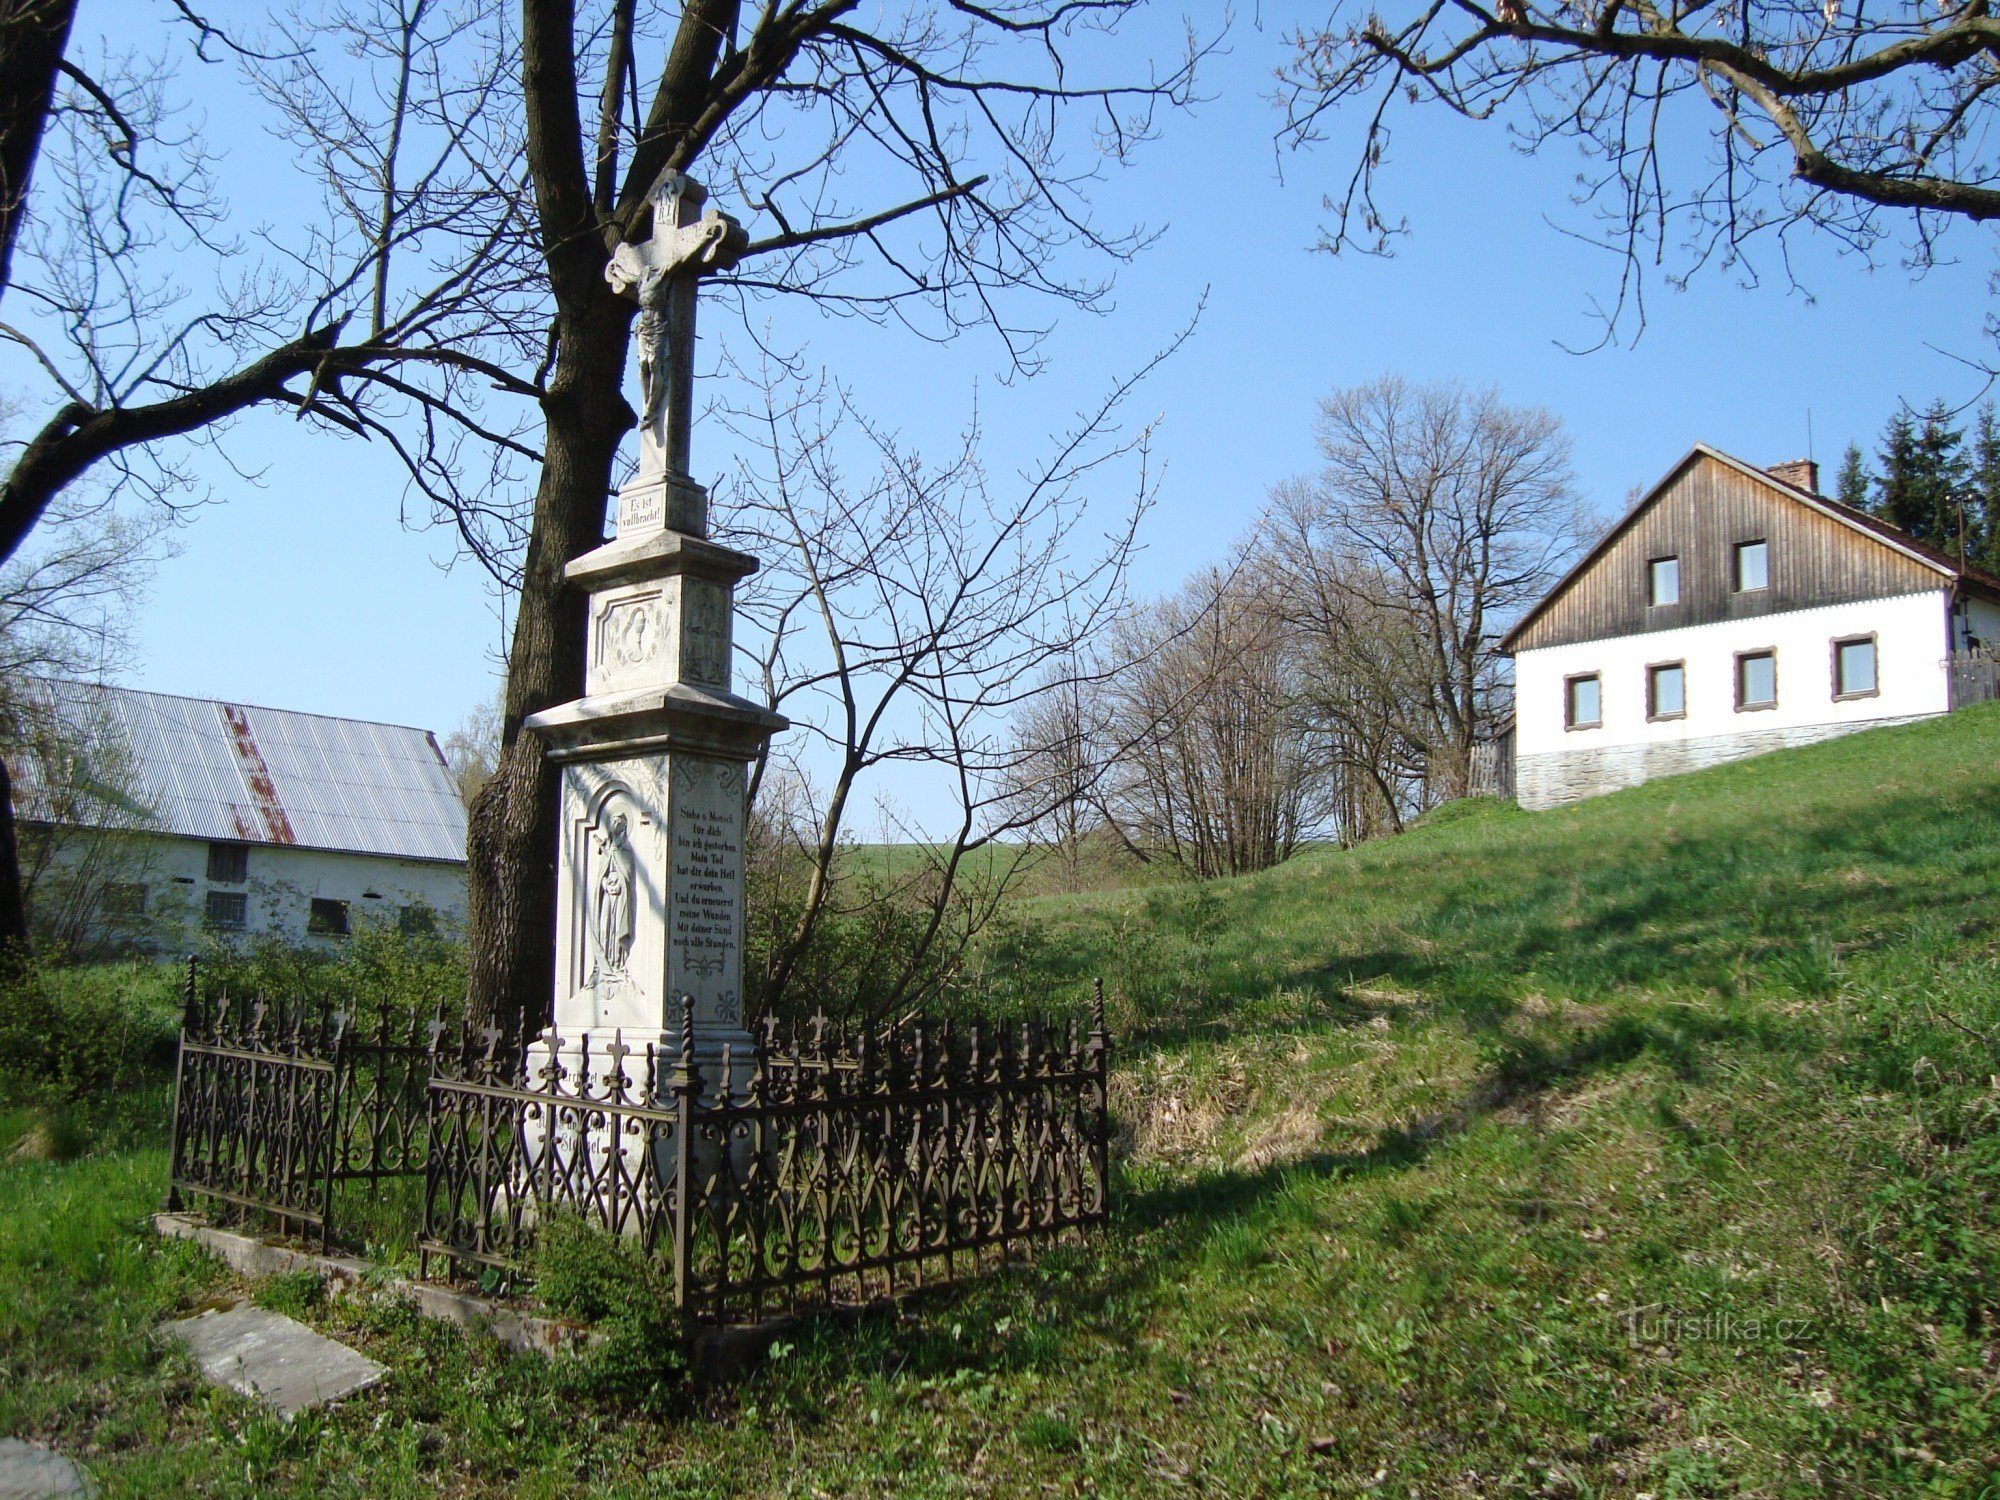 Norberčany-Stará Libavá-хрест 1892 року в центрі села-Фото: Ulrych Mir.